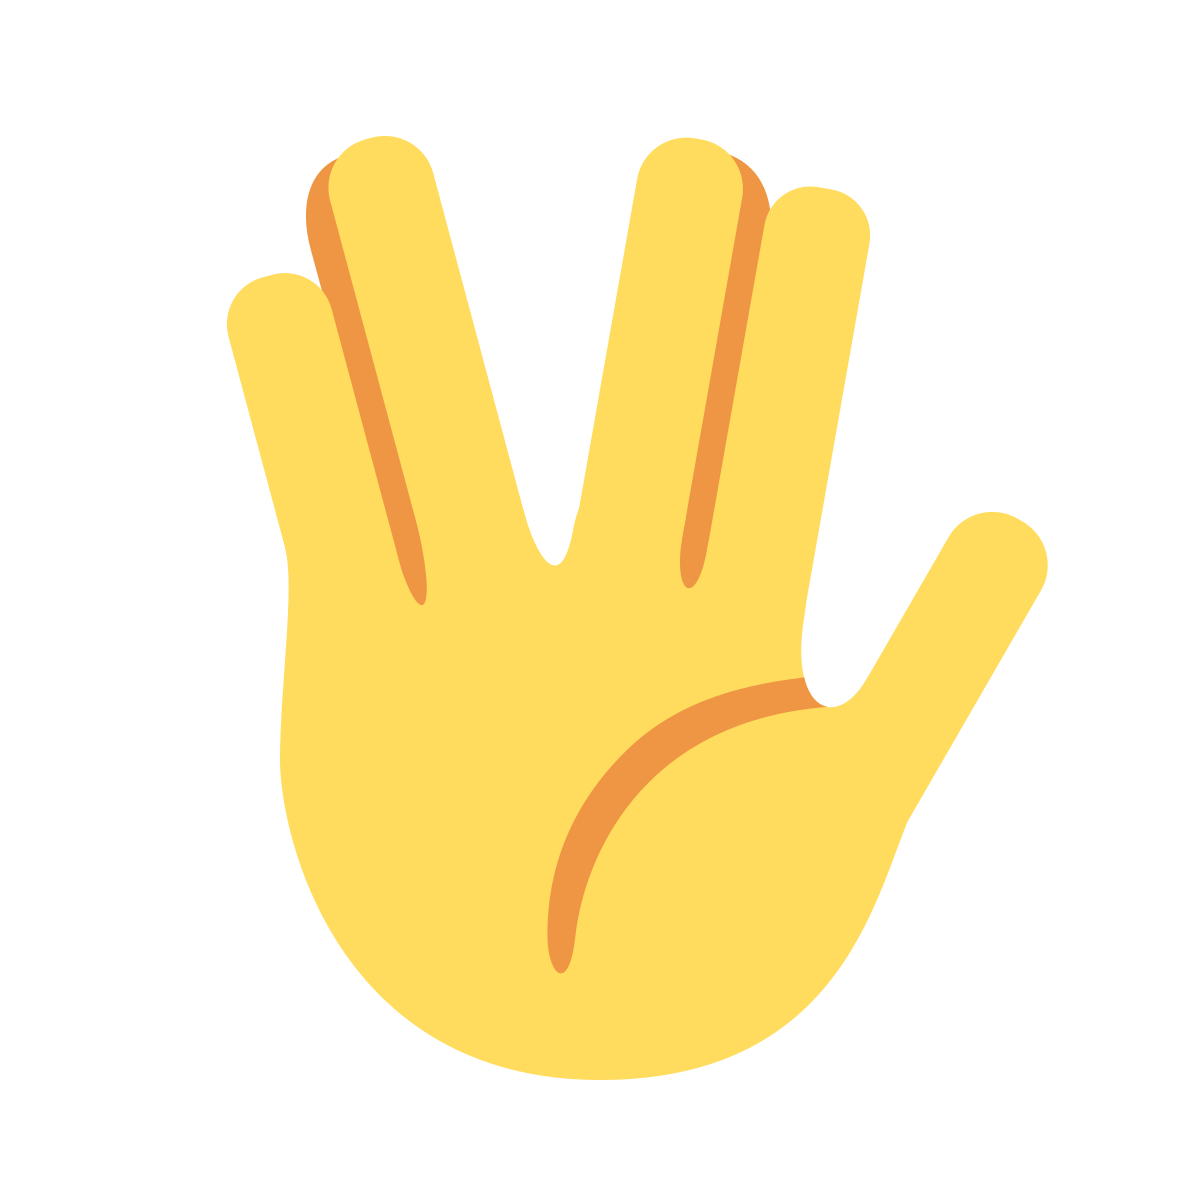 salute-emoji-transparent-png-526x328-free-download-on-nicepng